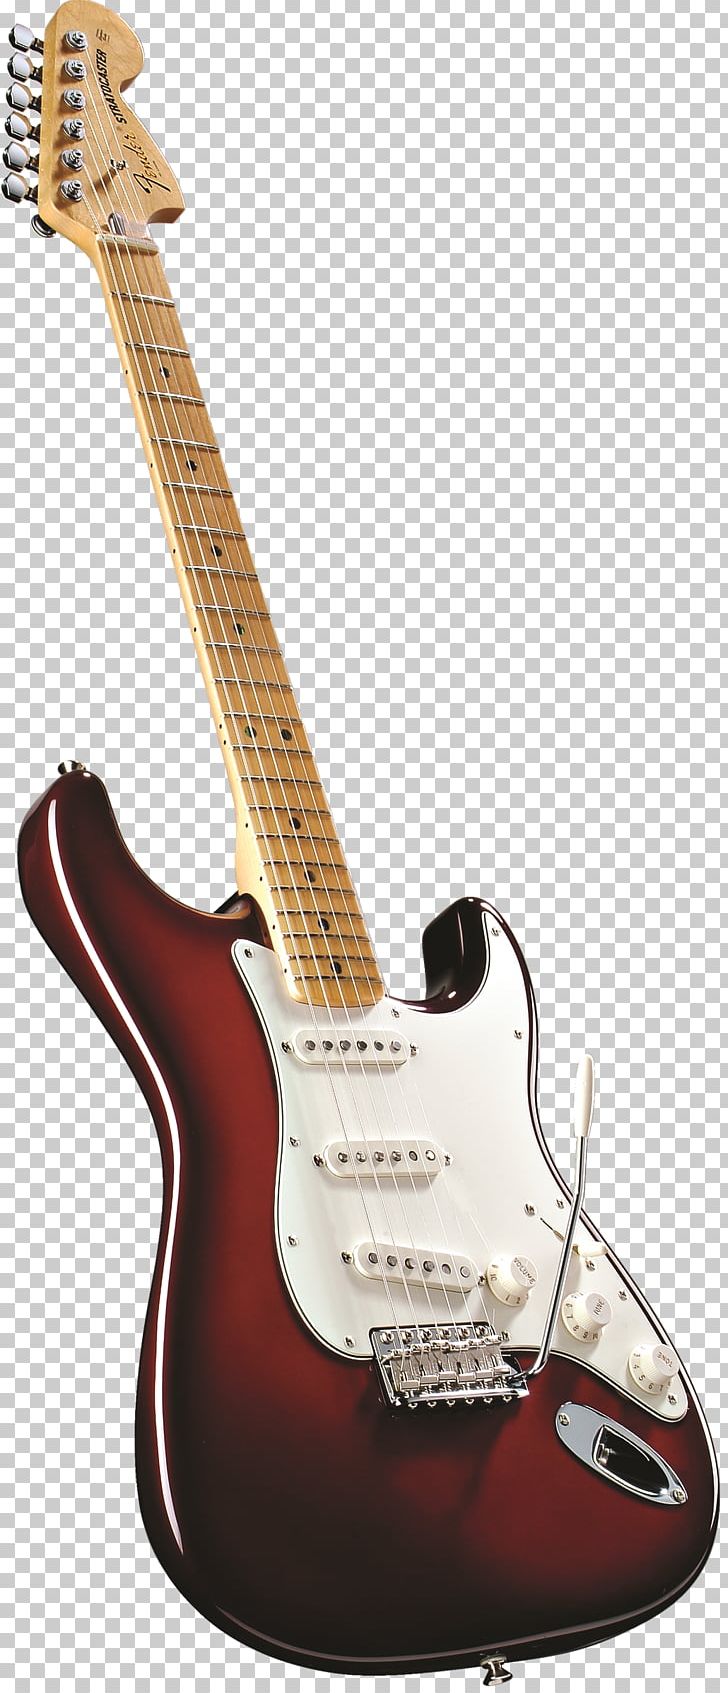 Fender Stratocaster Eric Clapton Stratocaster Musical Instruments String Instruments Guitar PNG, Clipart, Acoustic Electric Guitar, Acoustic Guitar, Bass, Bridge, Fender Stratocaster Free PNG Download